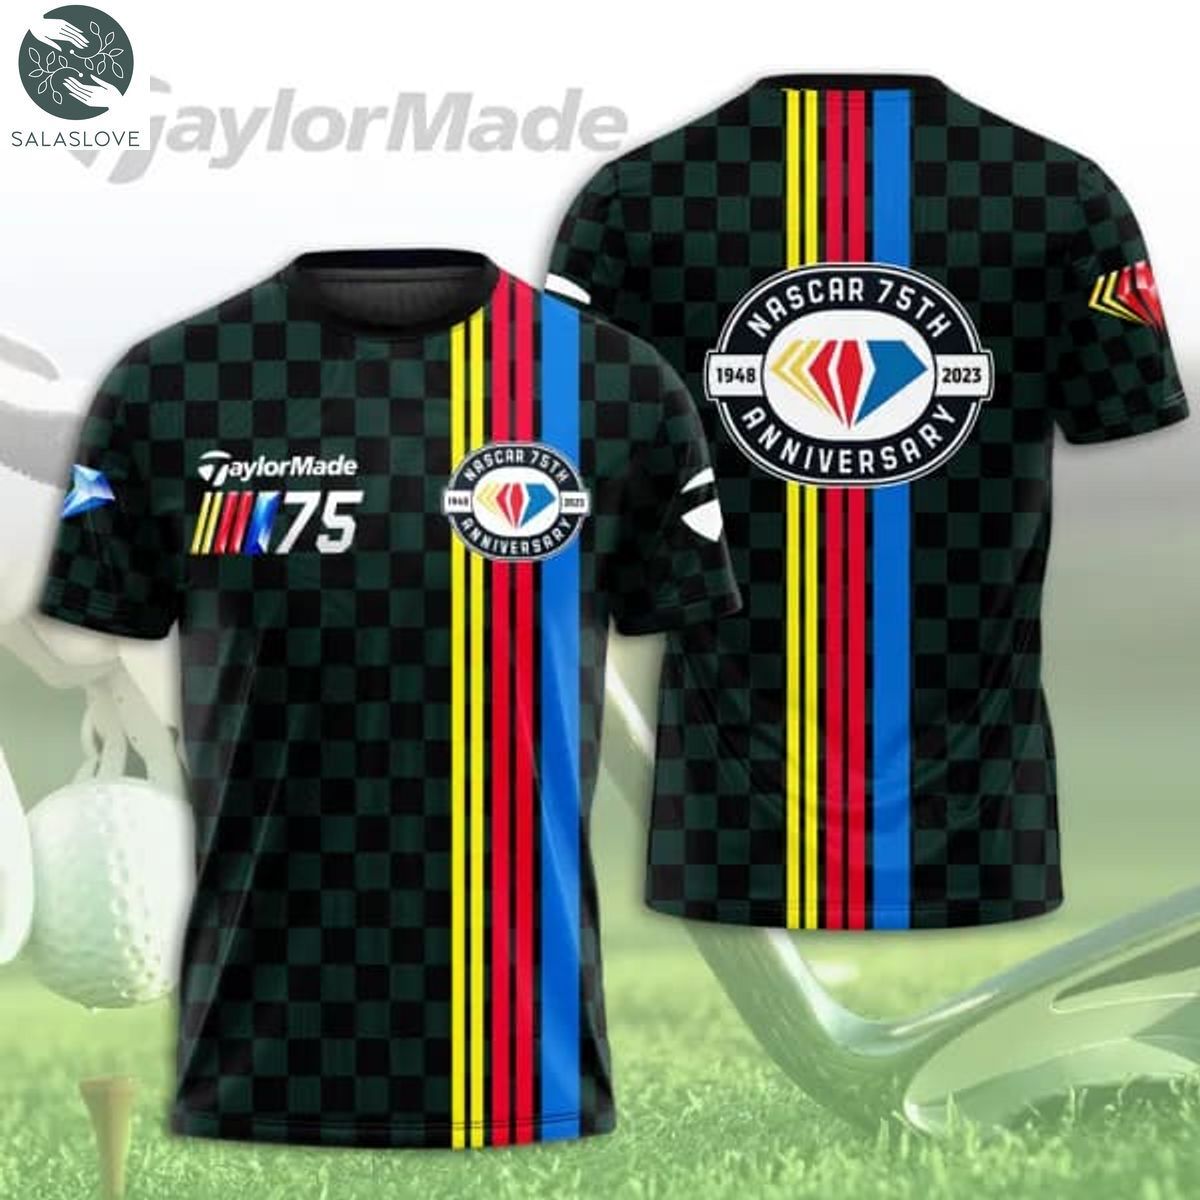 NASCAR x Taylormade 3D T-shirt TY180727